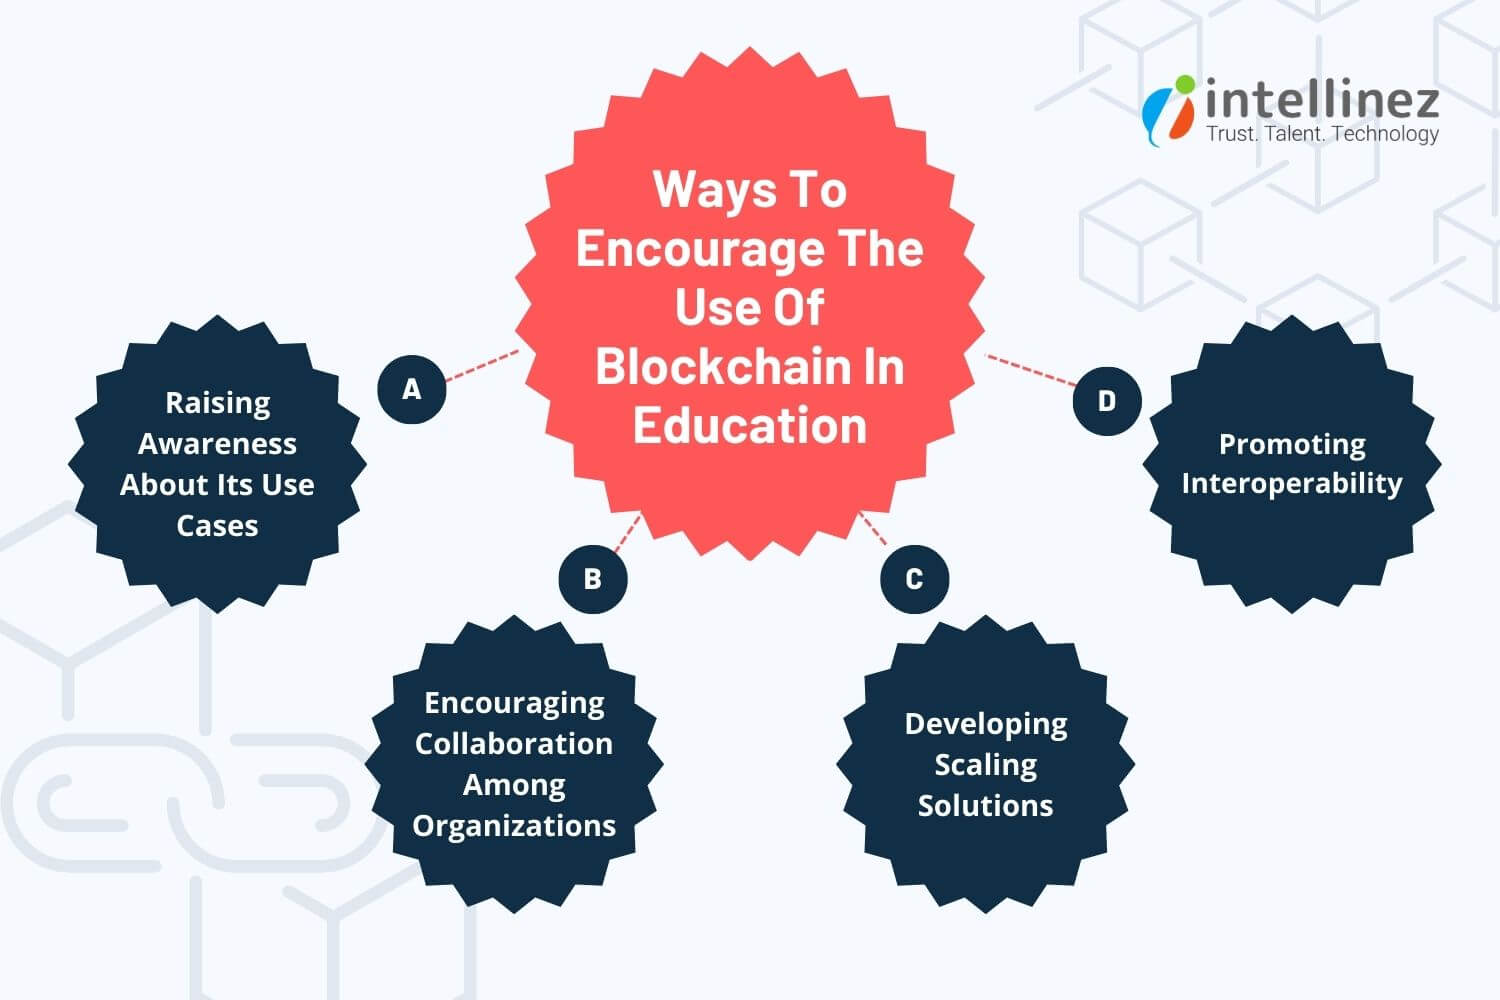 Leveraging Blockchain Technology in Education